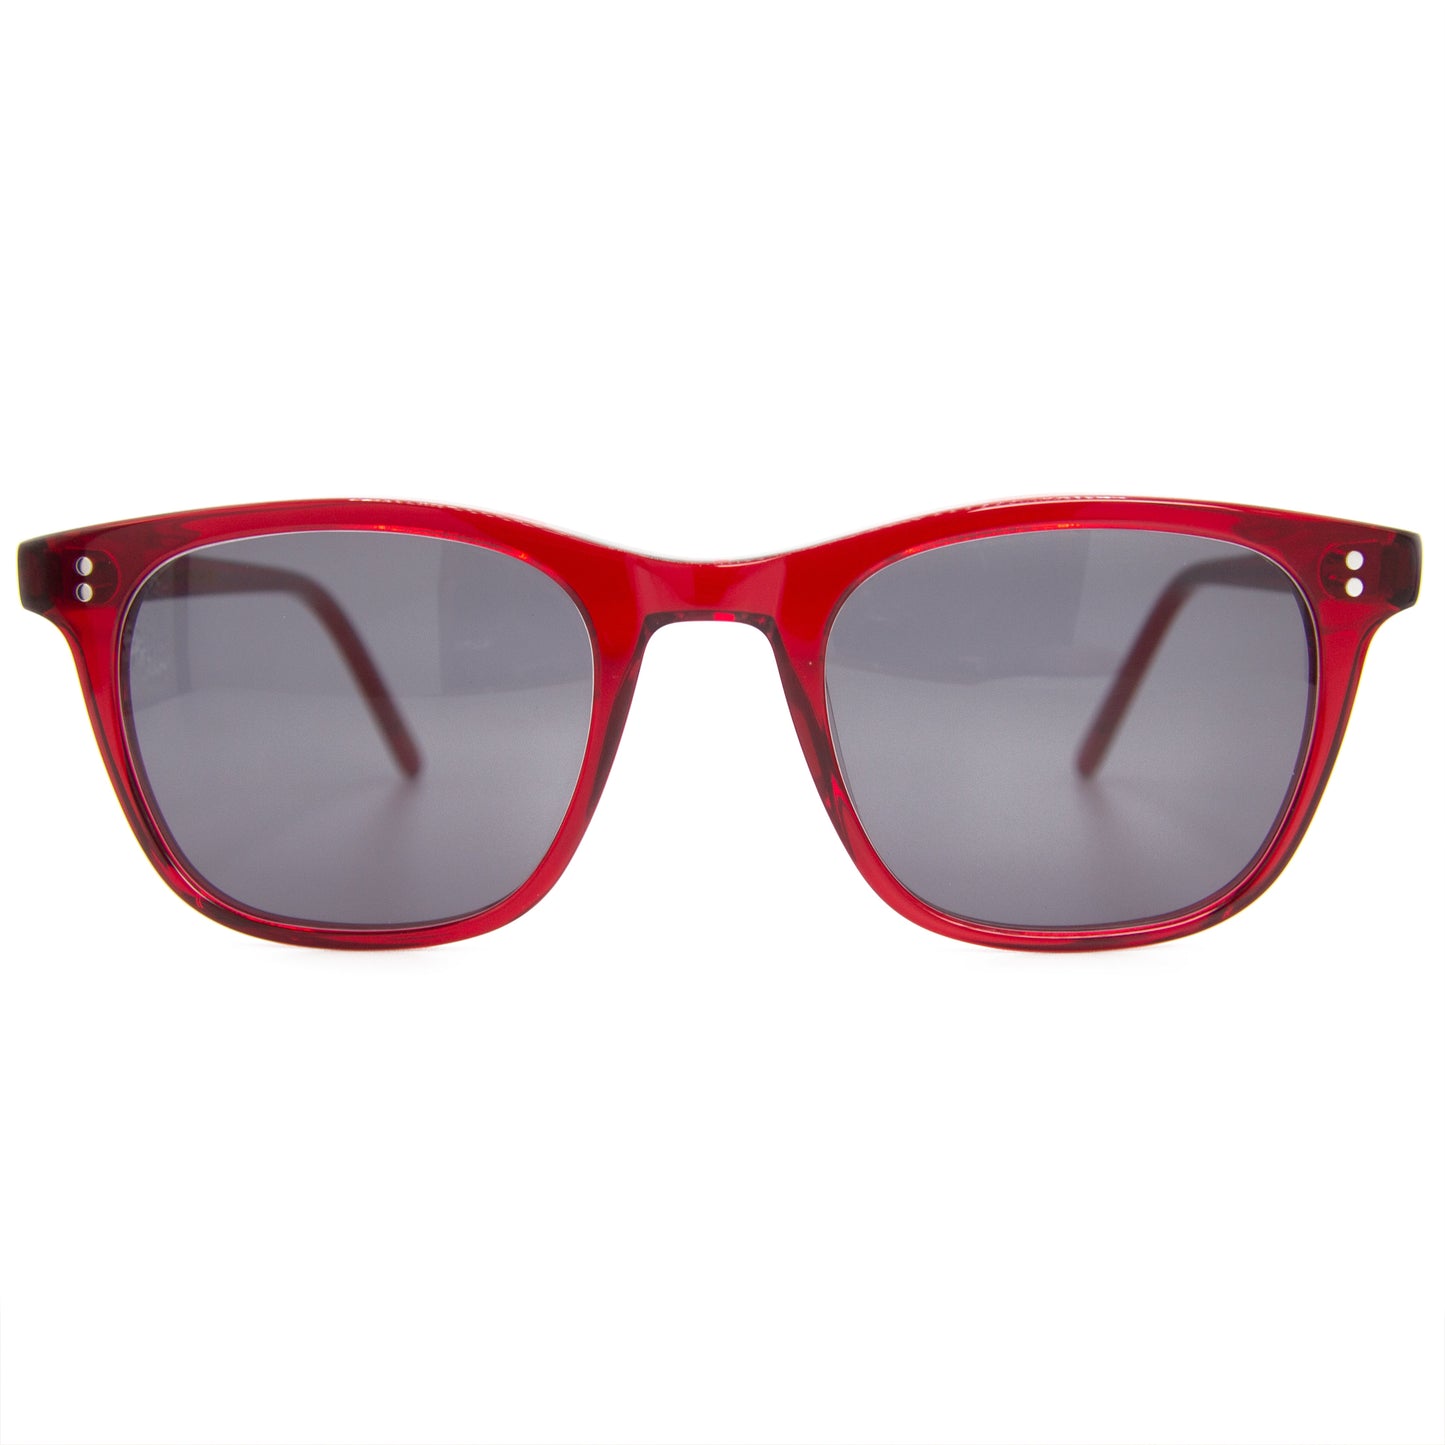 3 brothers - Yai Yai Alki - Red - Prescription Sunglasses 